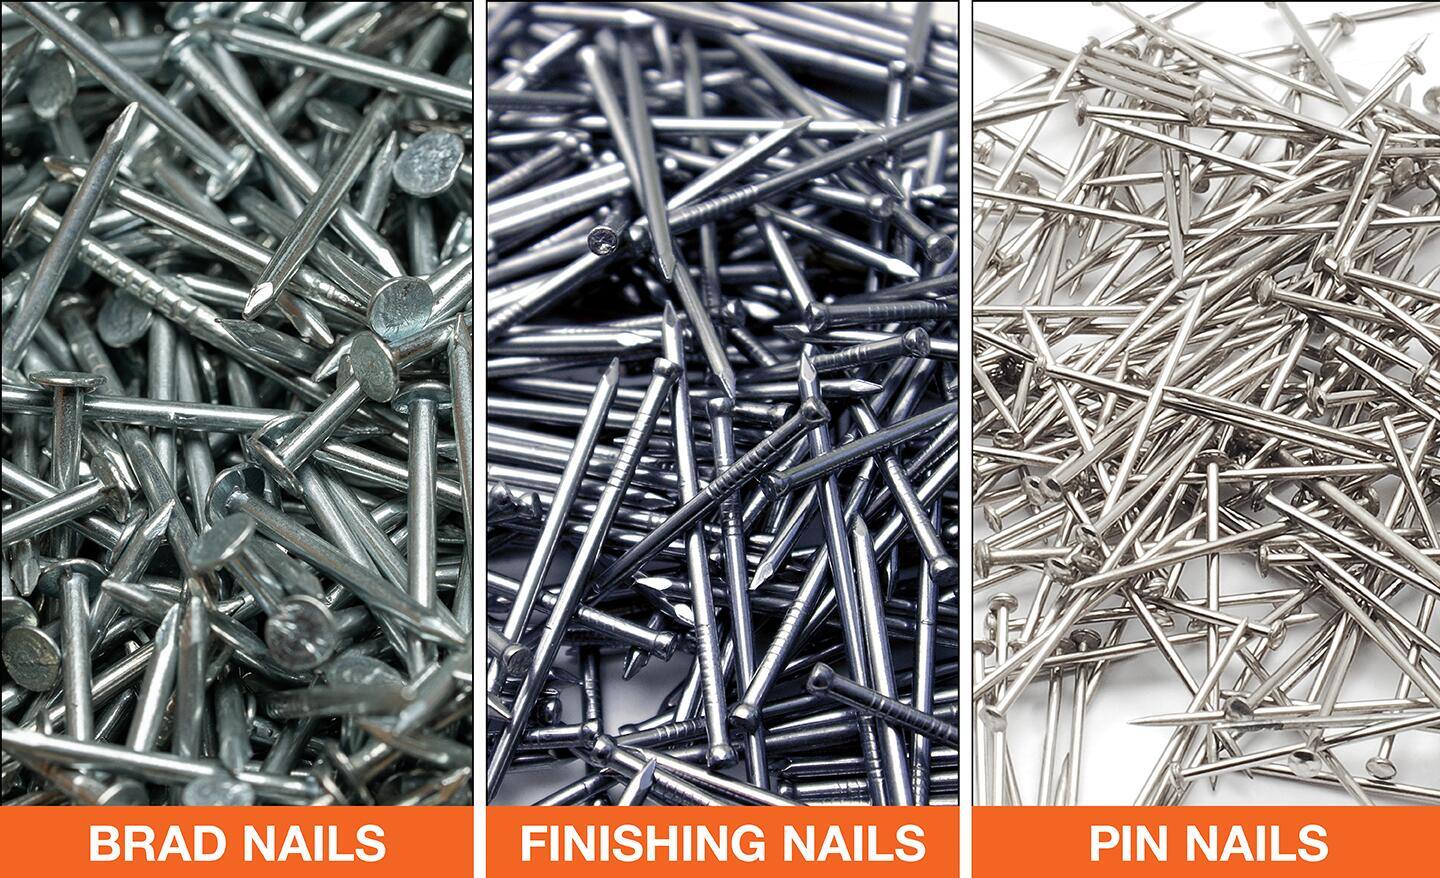 Brad Nails vs. Finish Nails - The Home Depot